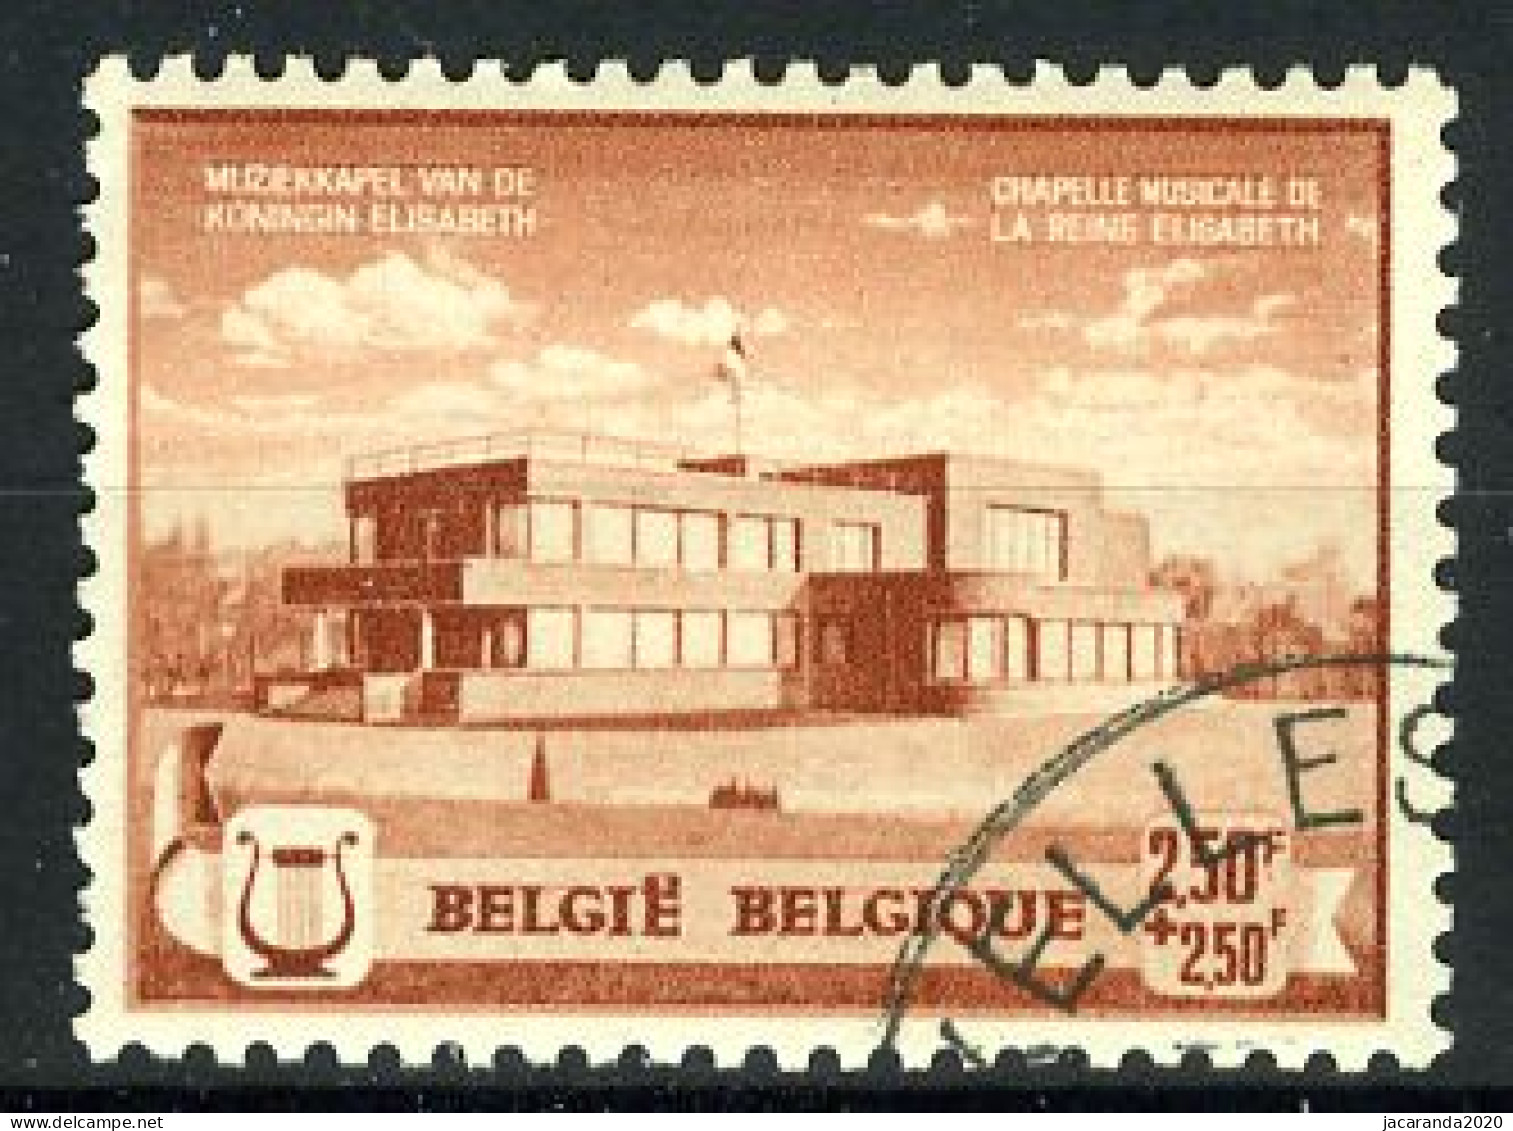 België 536 - Muziekstichting Koningin Elisabeth - Muziekkapel - Gestempeld - Oblitéré - Used - Used Stamps